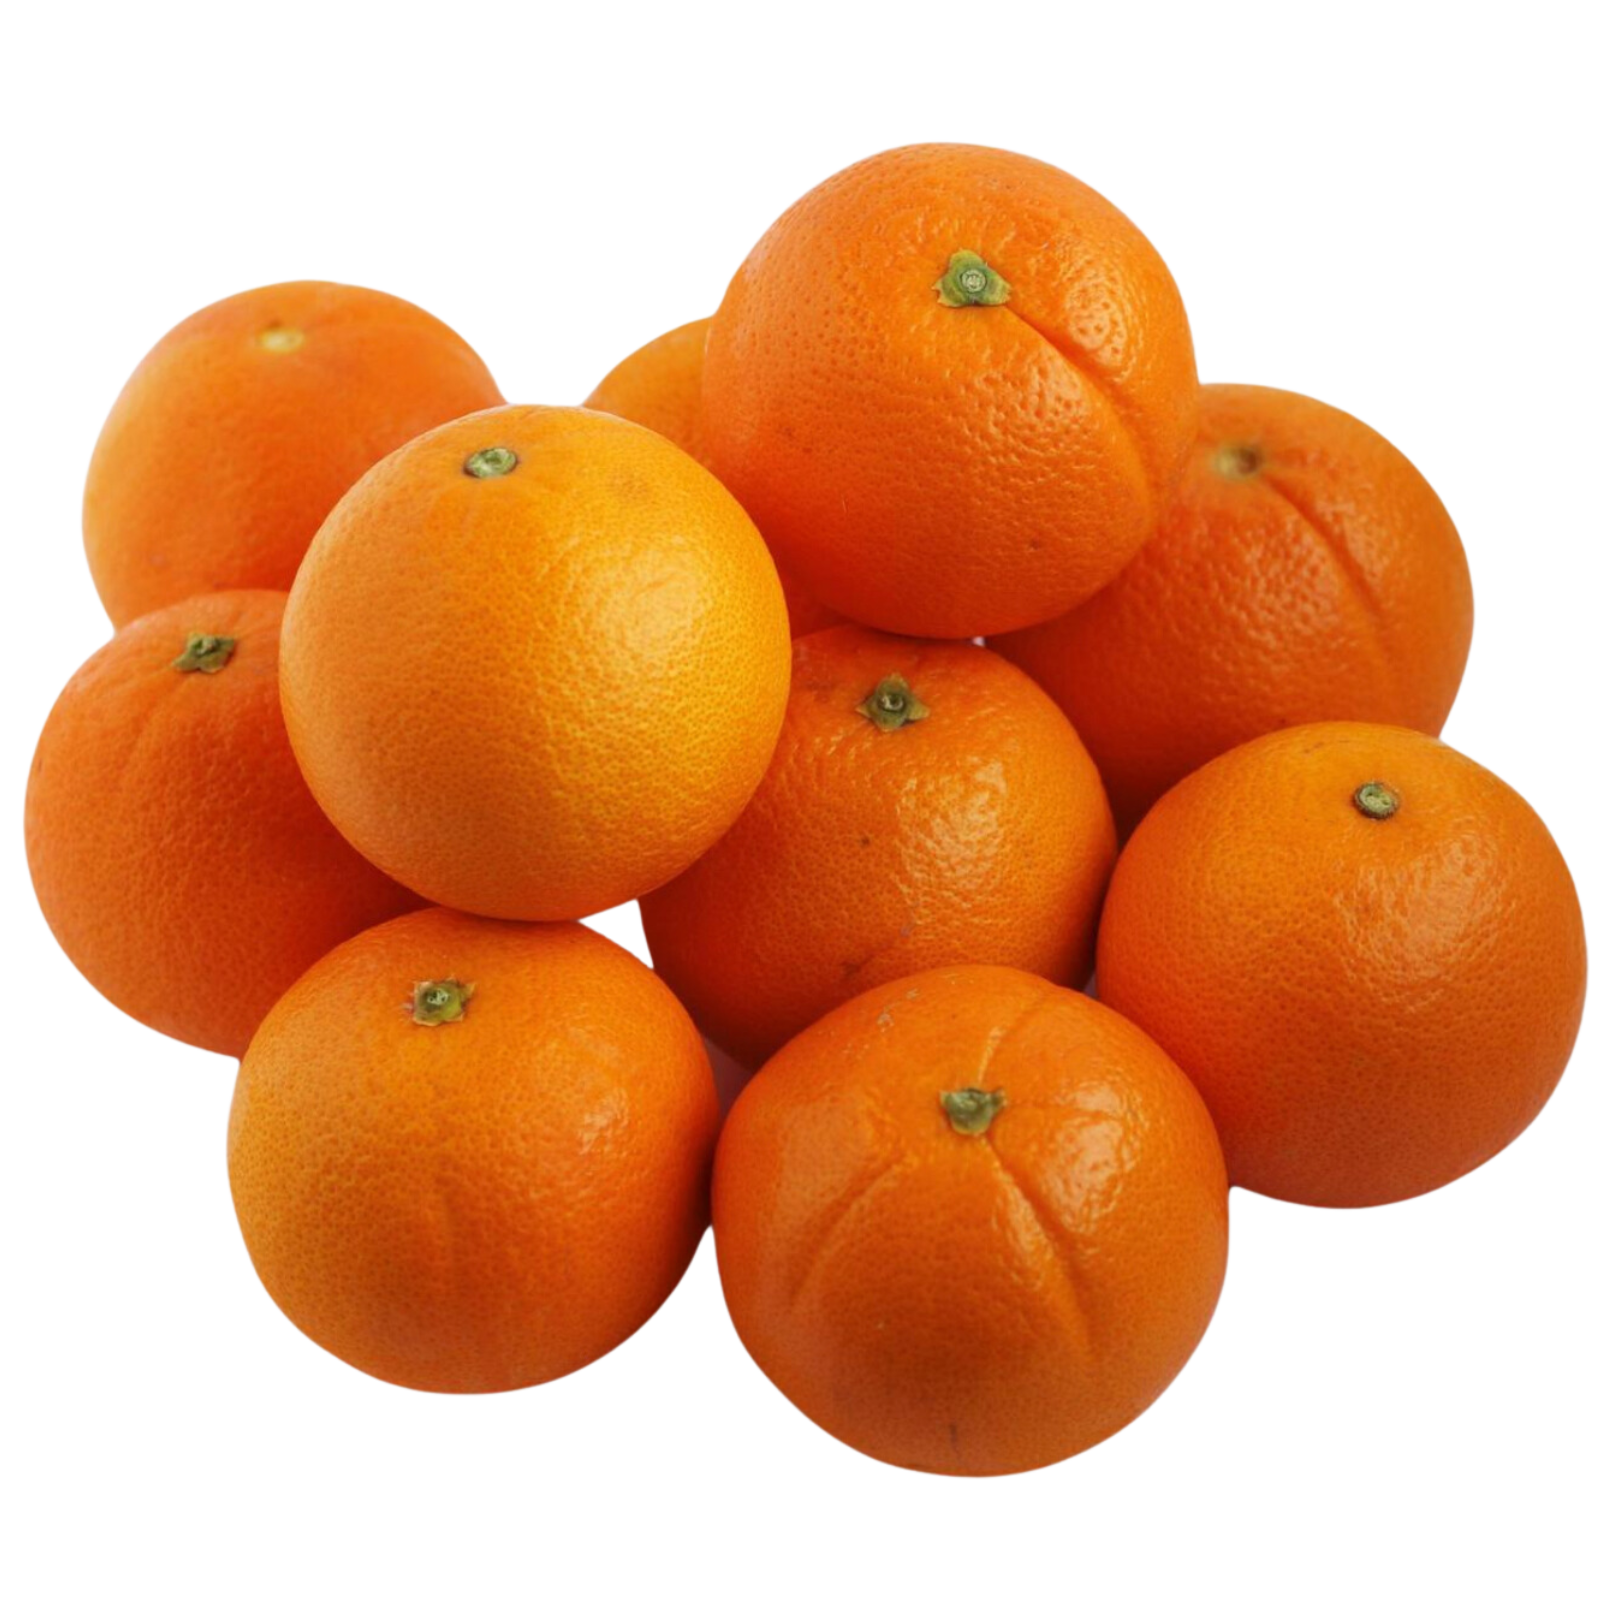 Wholegood Organic Oranges, 4pcs